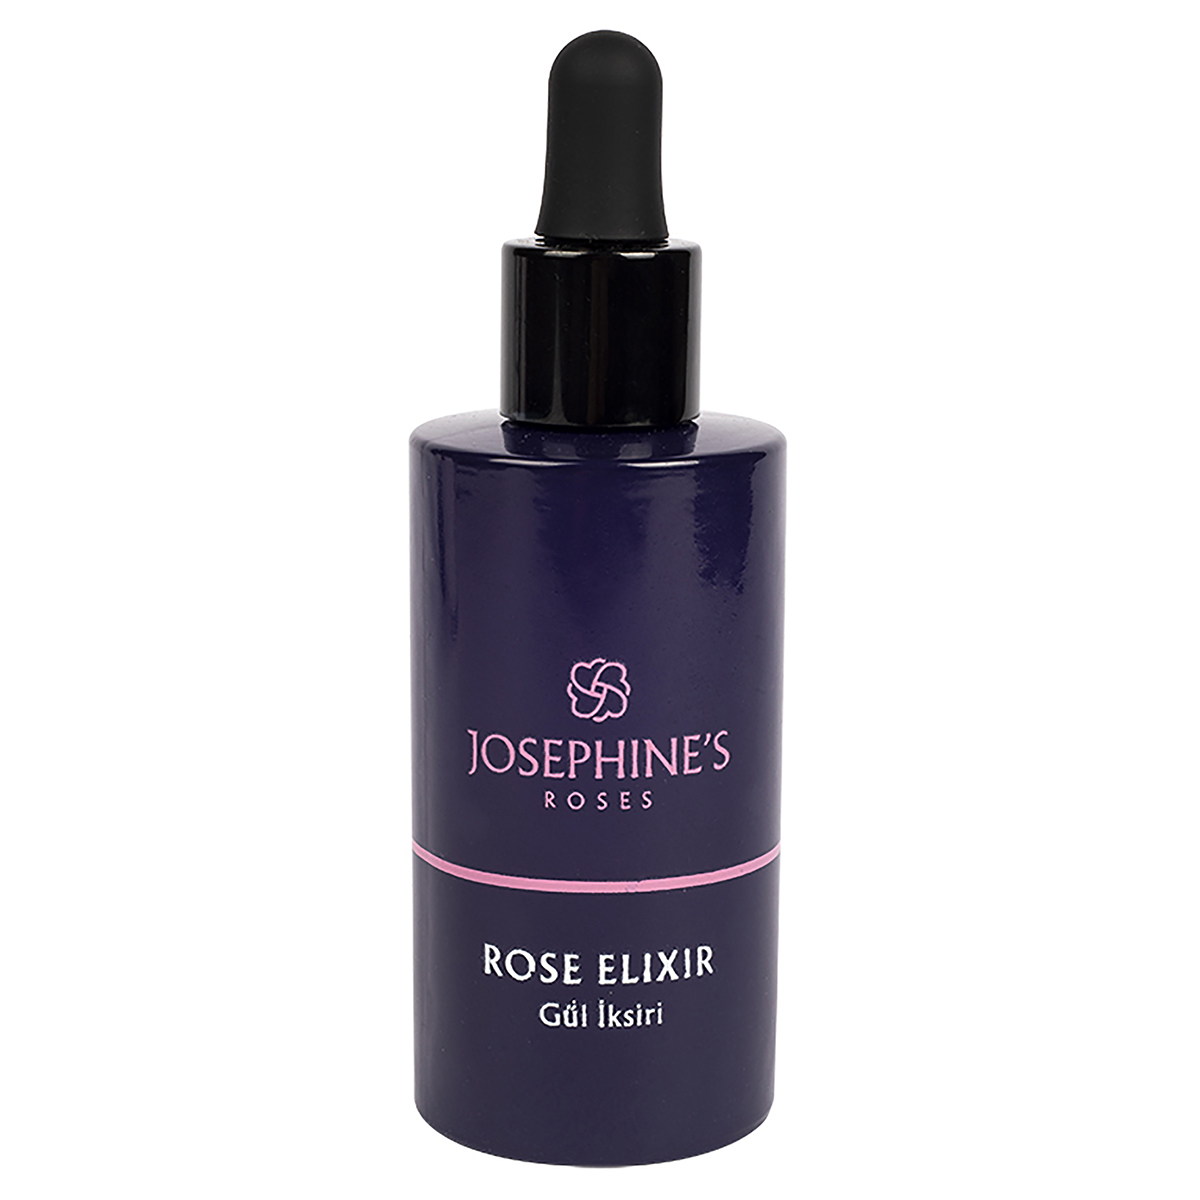 Josephine’s roses elixir serum